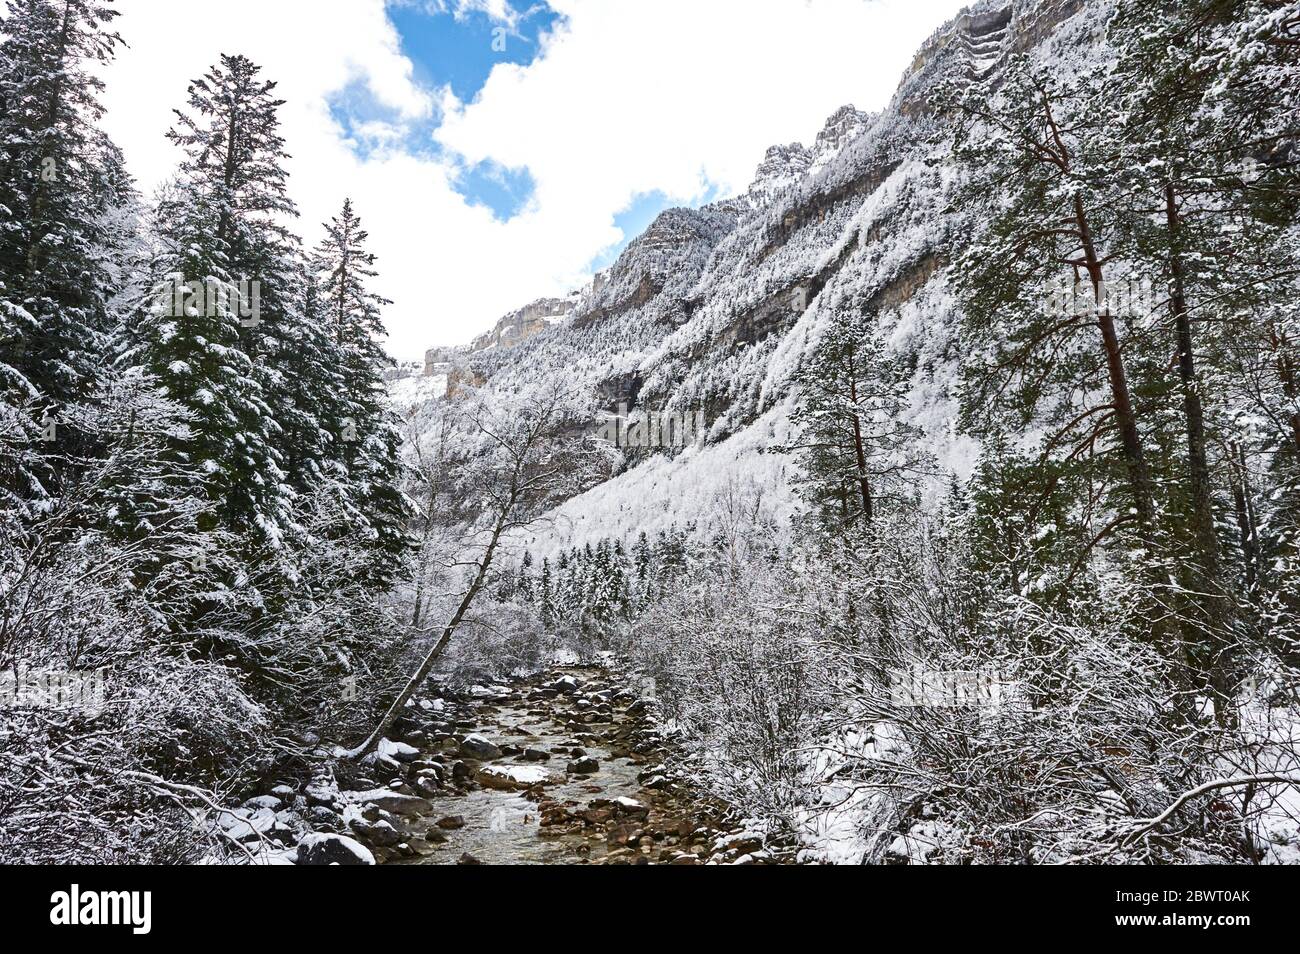 Pyrenees: Arazas river along snowy alpine landscape in the National park of Ordesa and Monte Perdido (Huesca province, Aragon region, Spain) Stock Photo